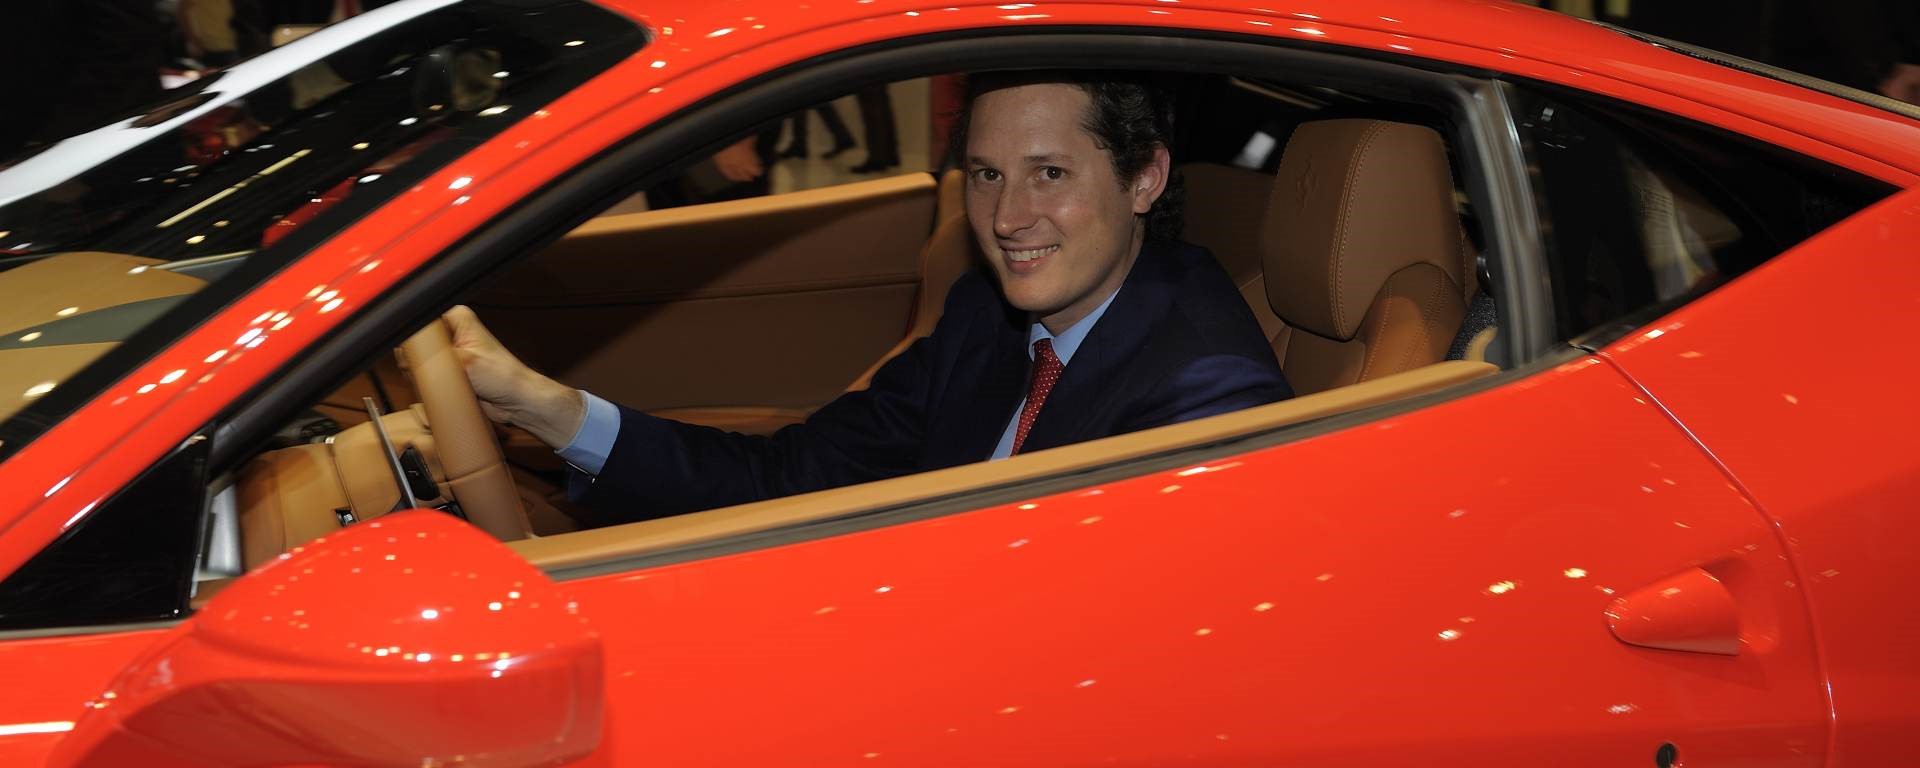 John Elkann in a red Ferrari.